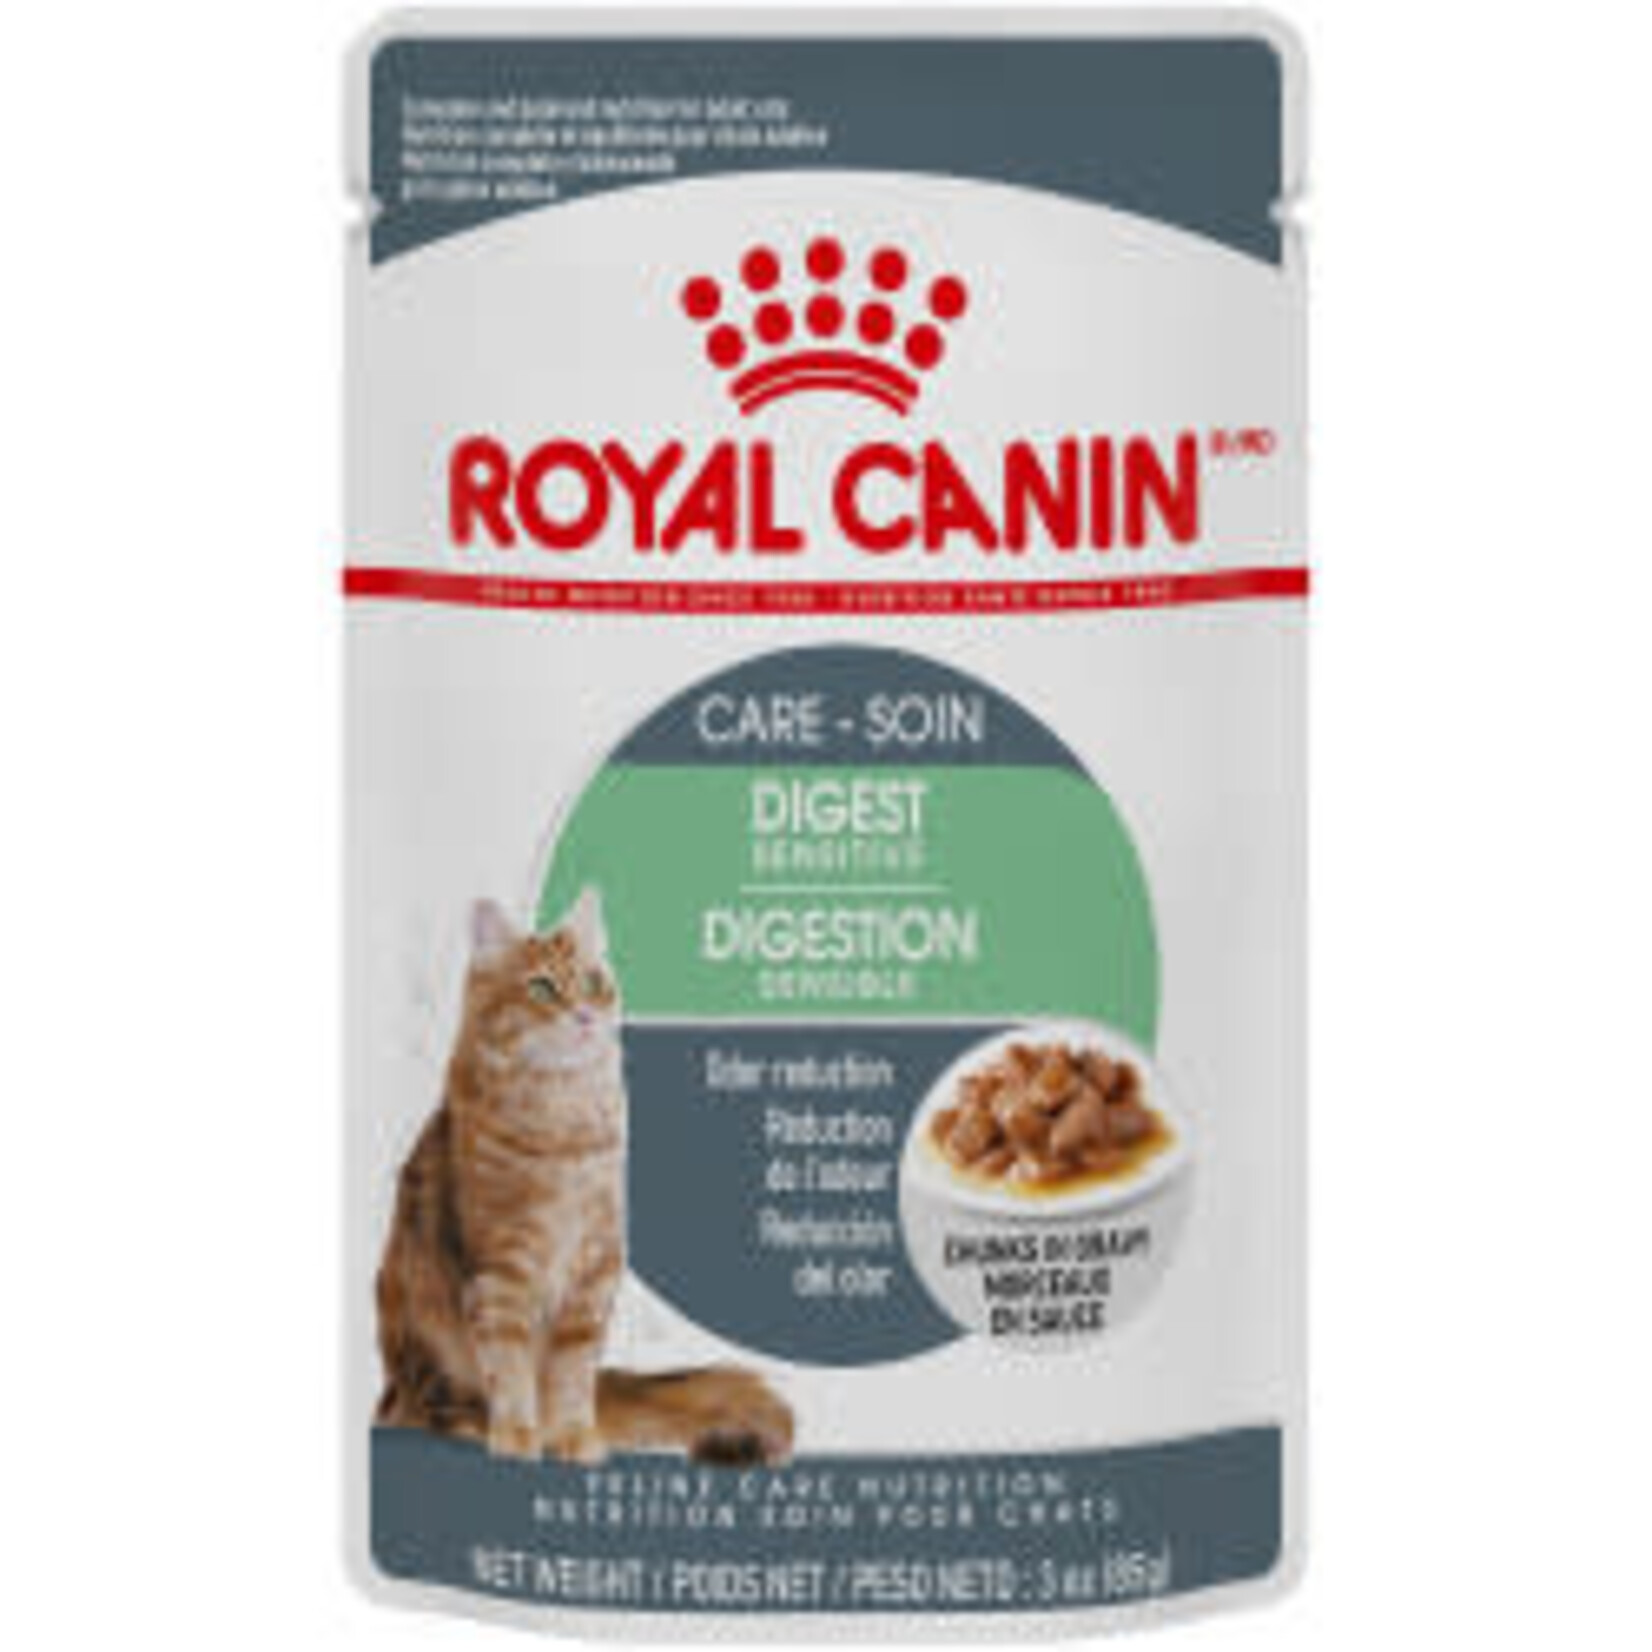 Royal Canin Royal Canin Chat Soin Digestif Morceaux En Sauce 3 oz/85 g